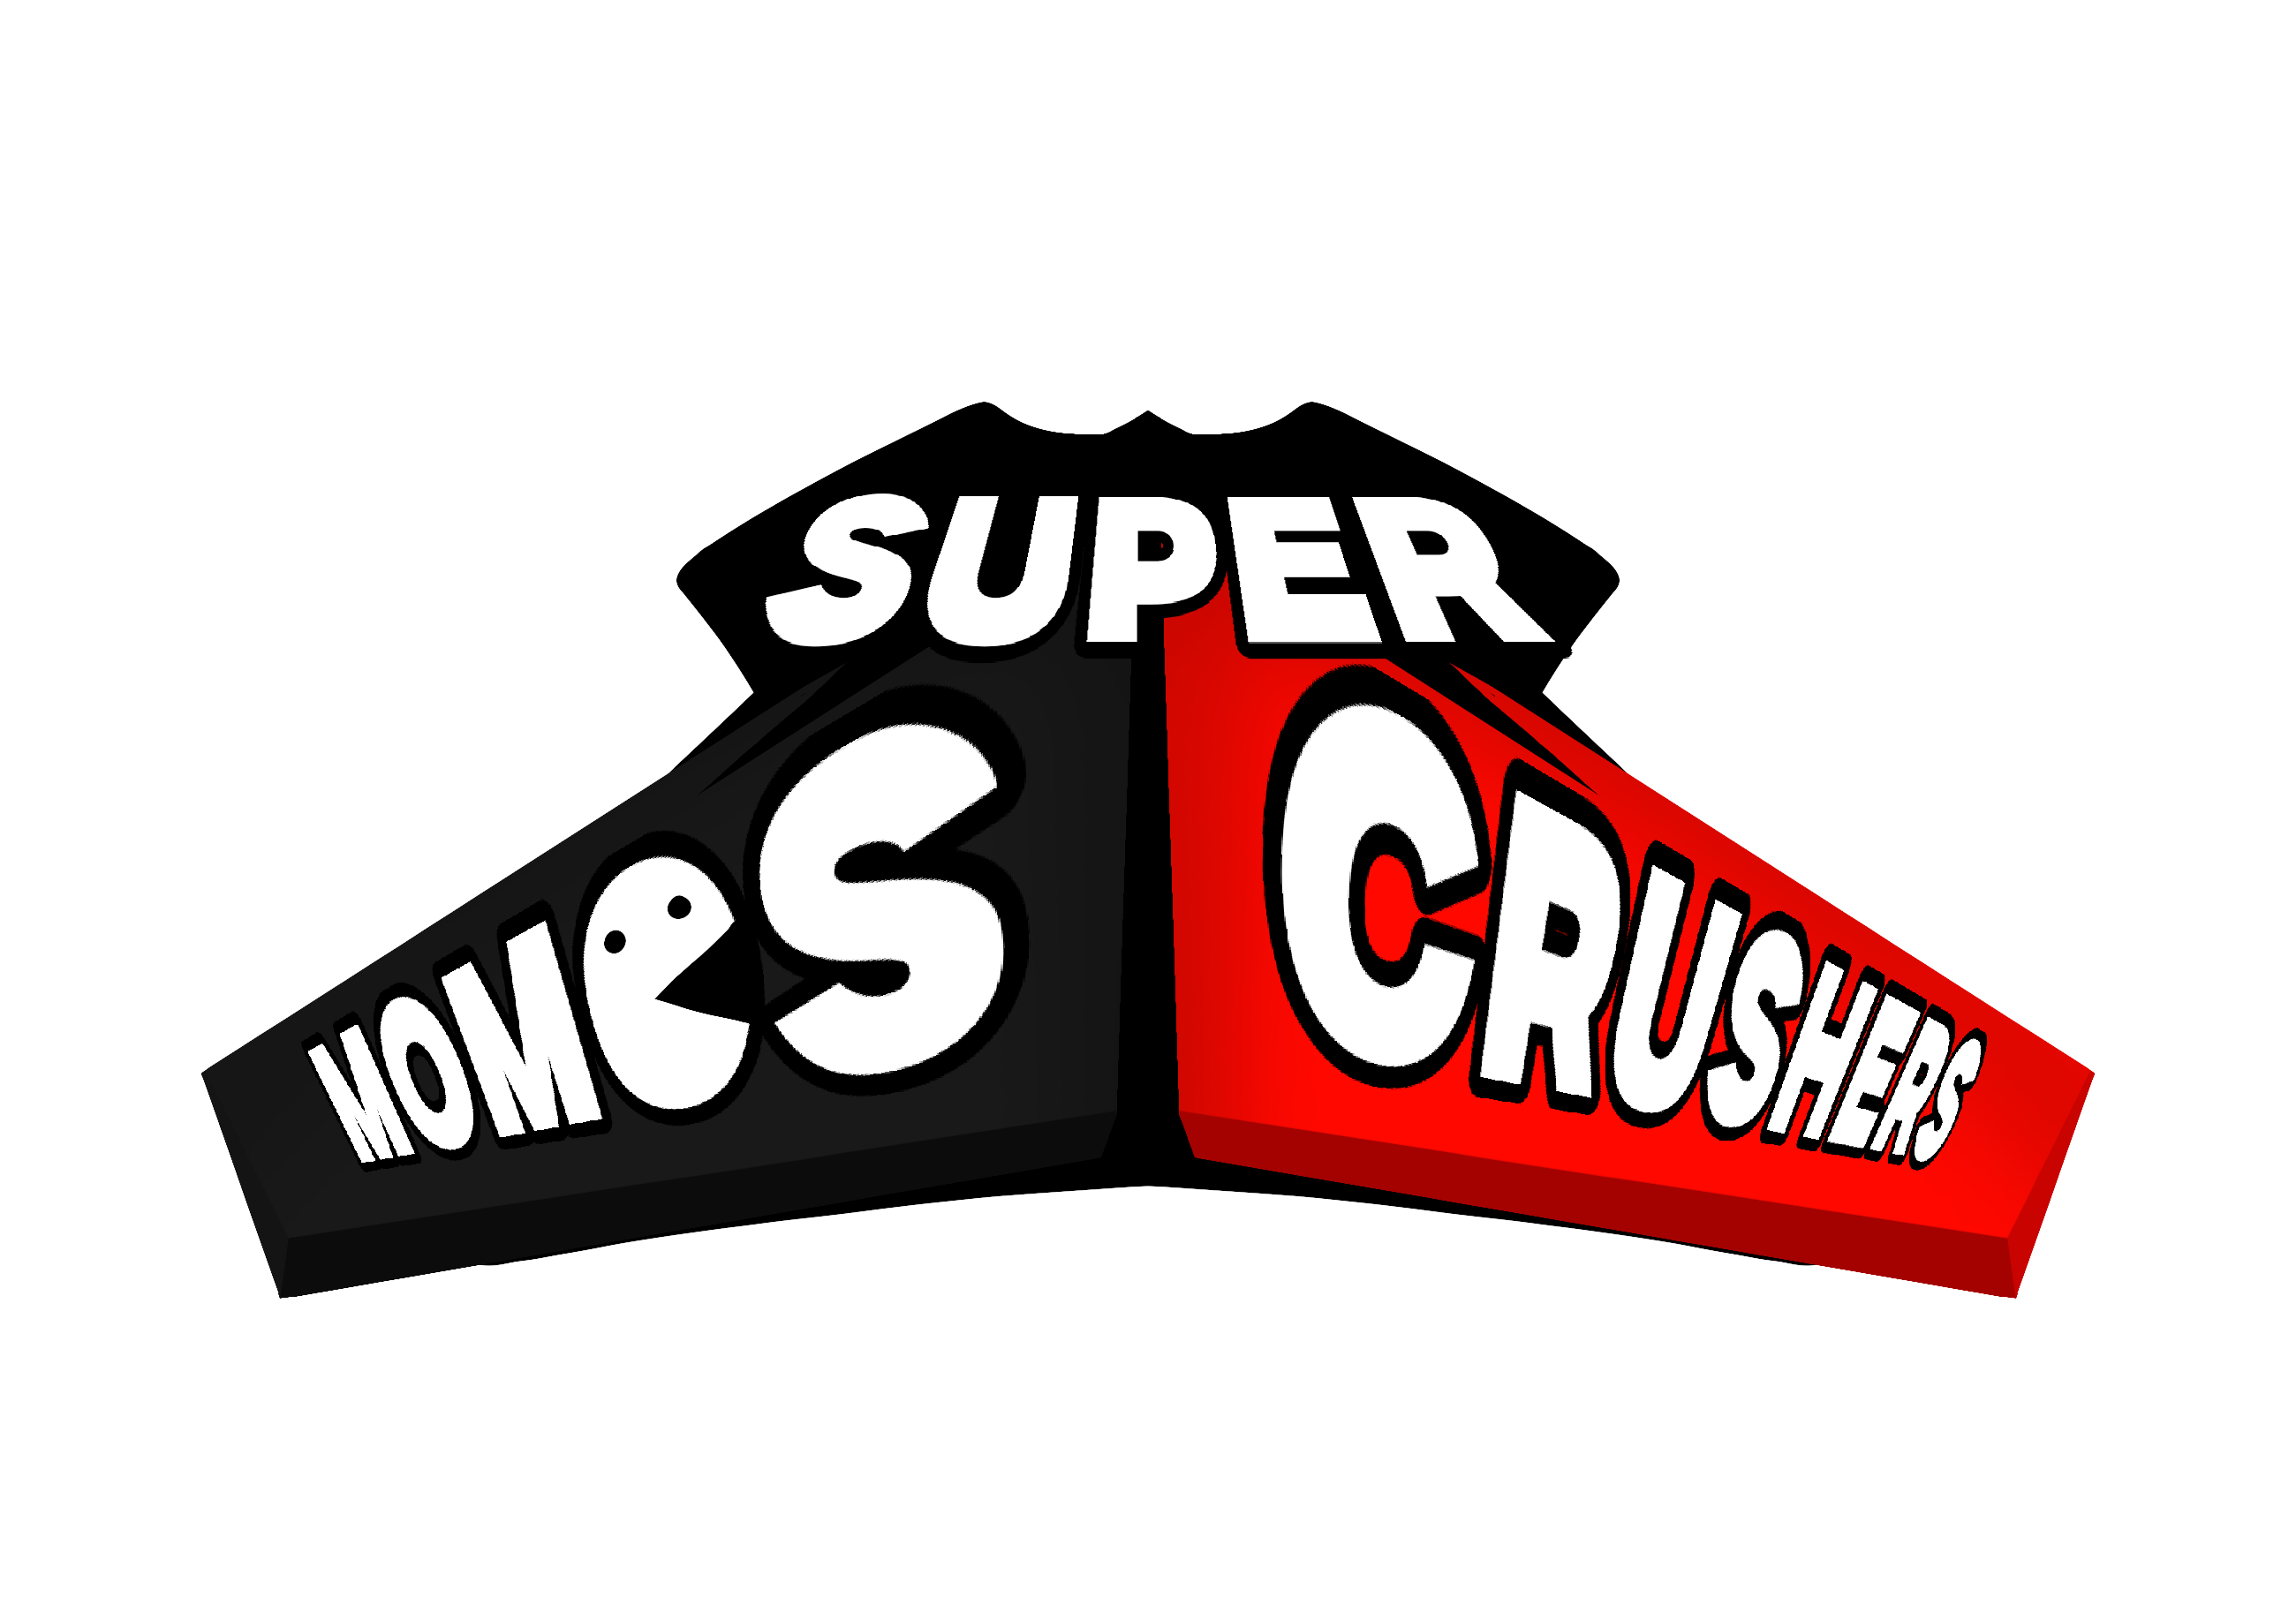 Super Momos Crushers